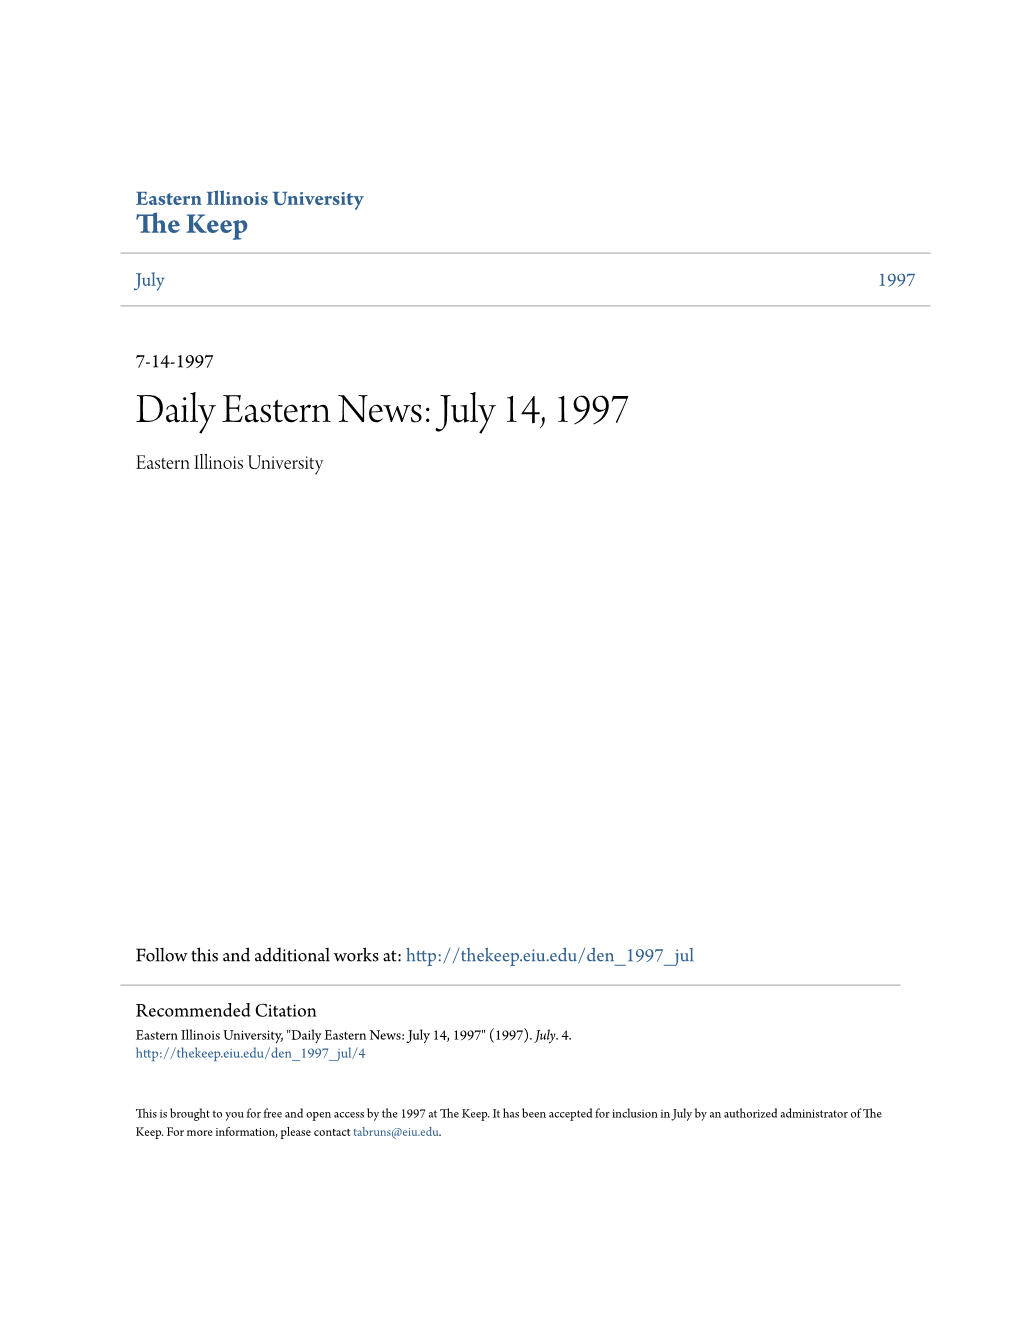 Daily Eastern News: July 14, 1997 Eastern Illinois University